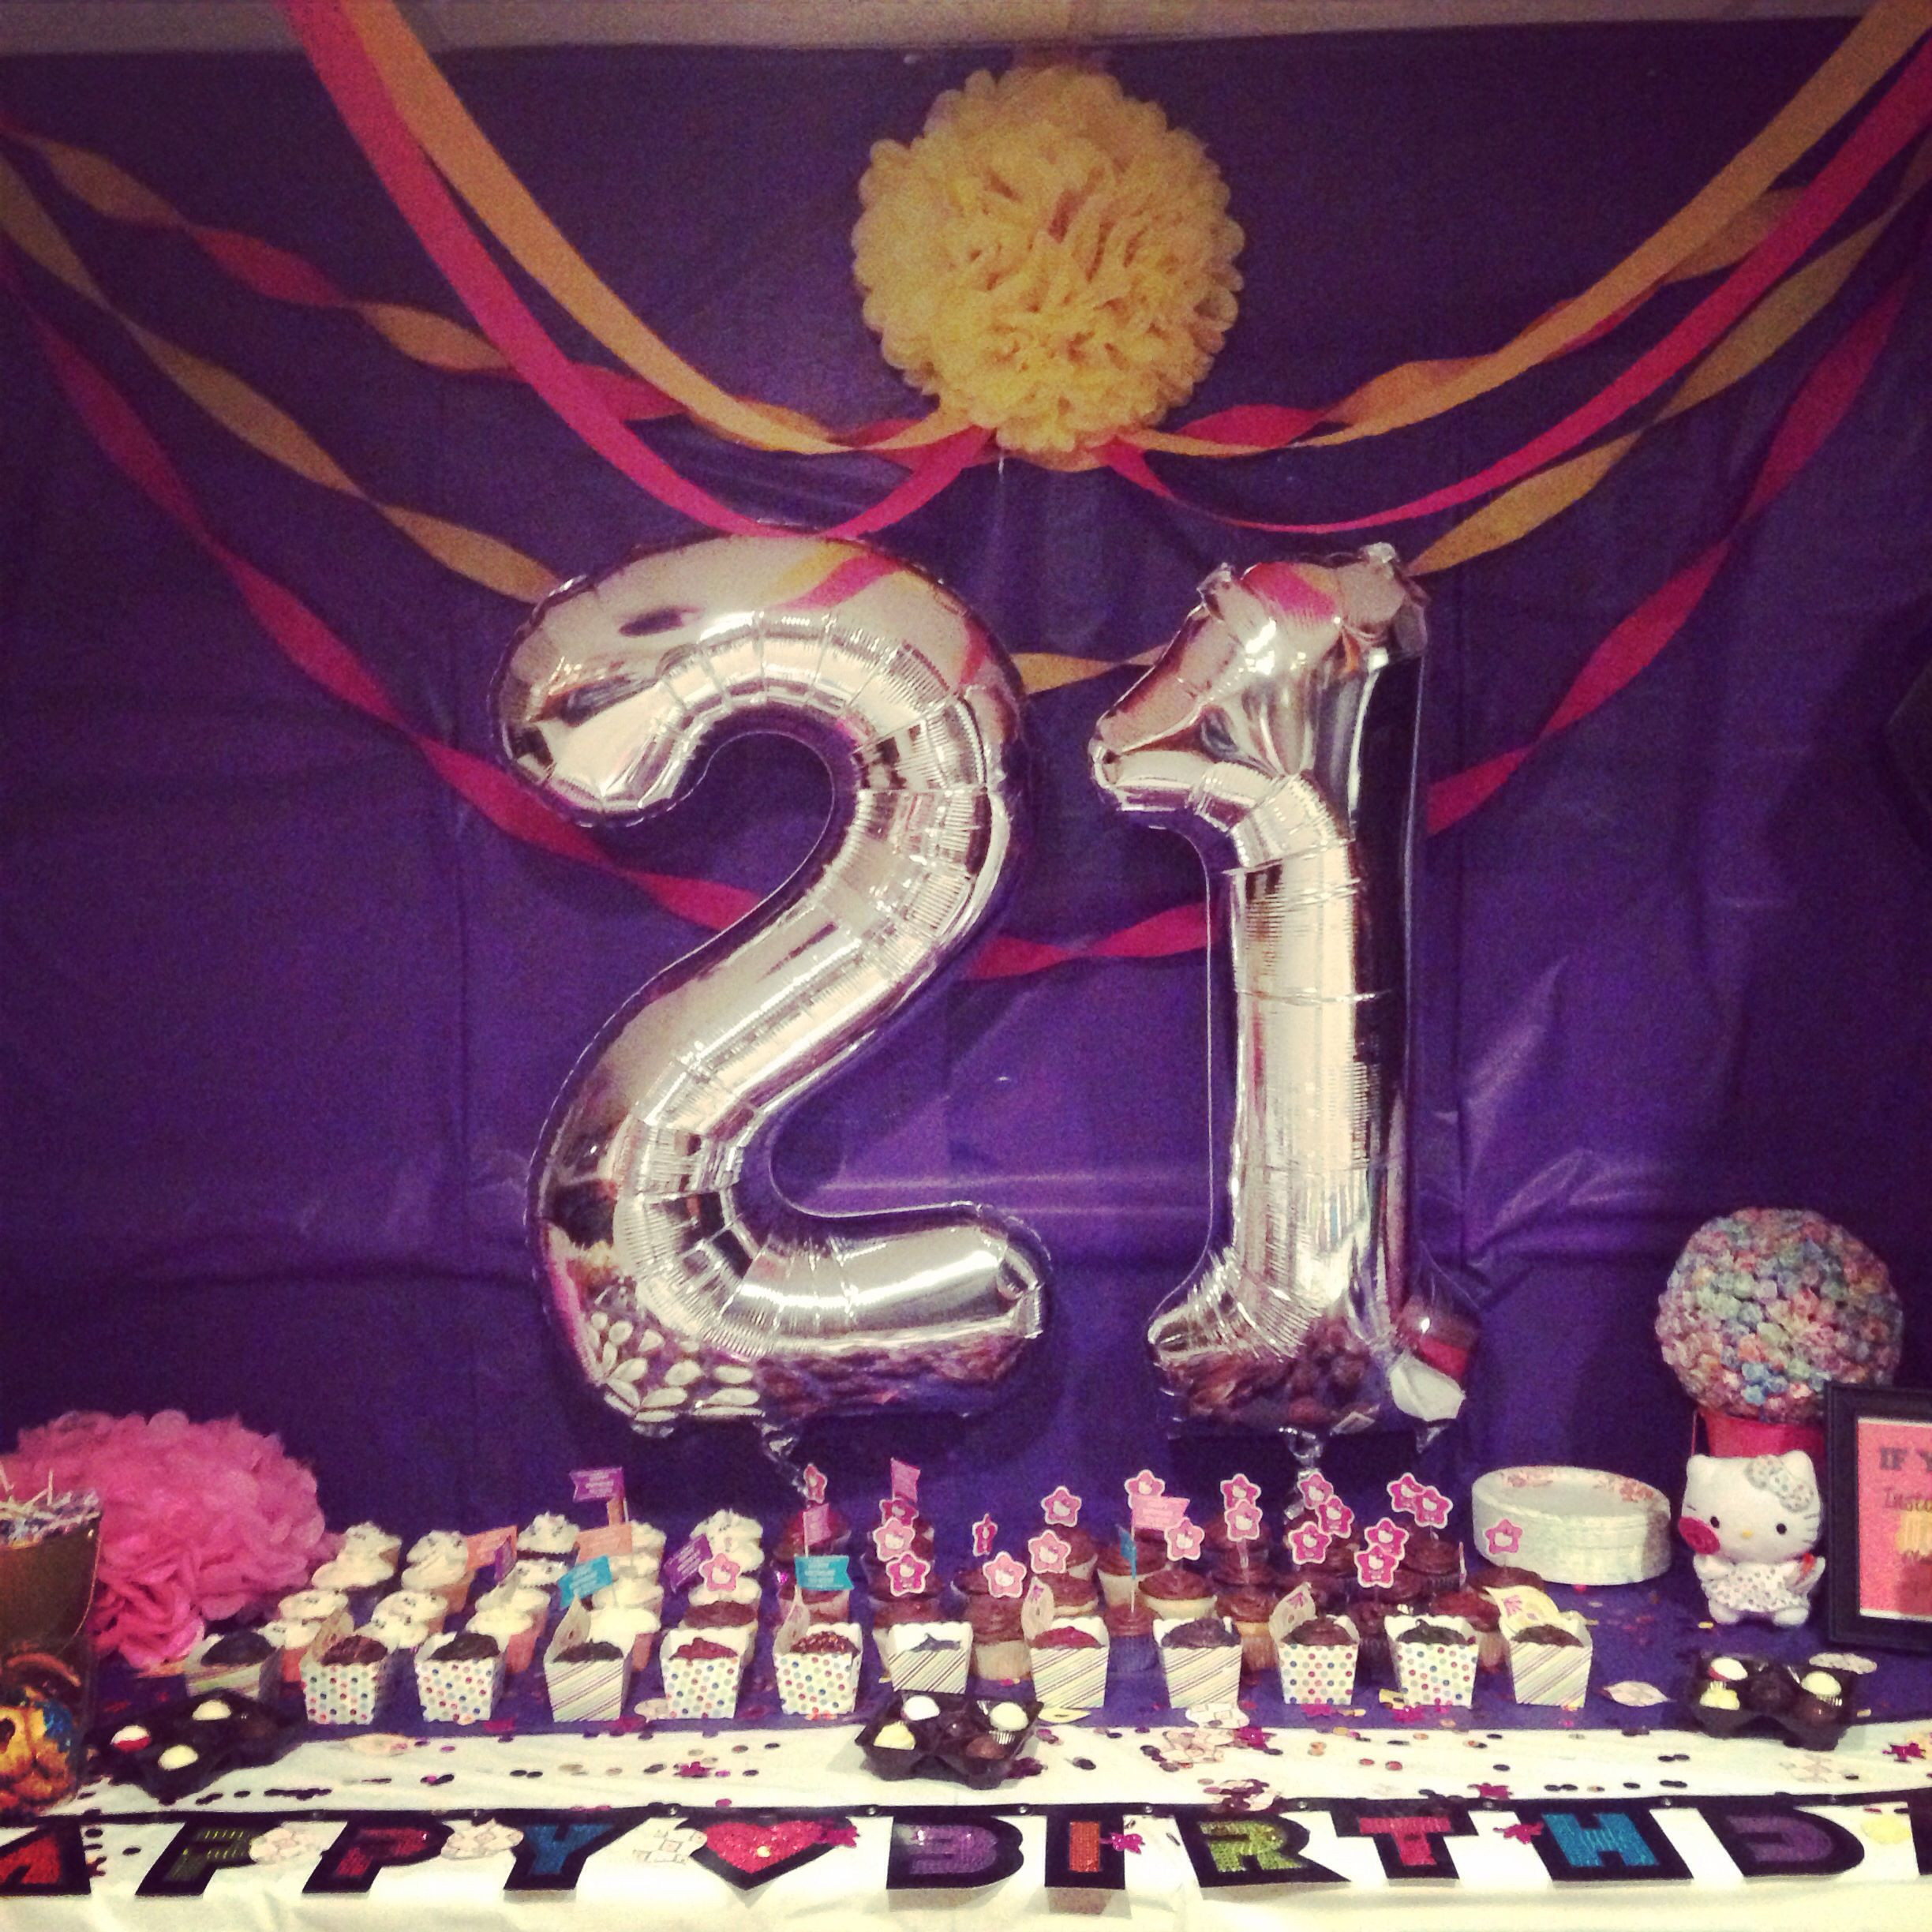 21st Birthday Party Decorations
 Best 25 21st birthday decorations ideas on Pinterest